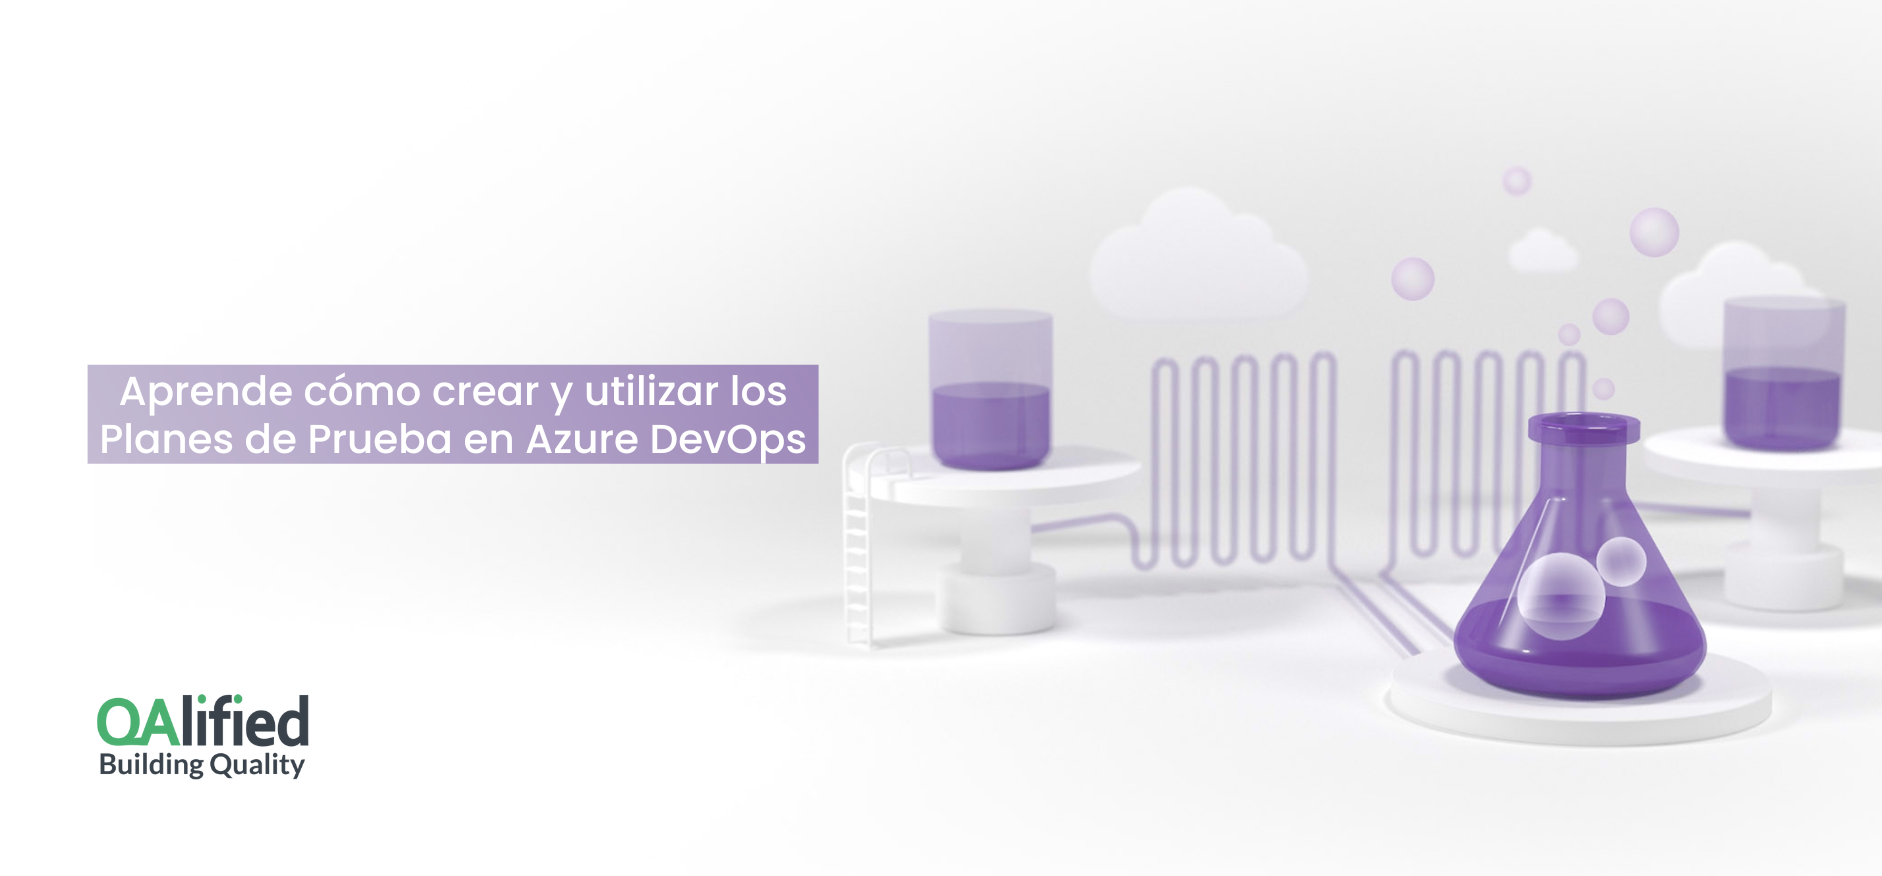 Azure DevOps Test Plans